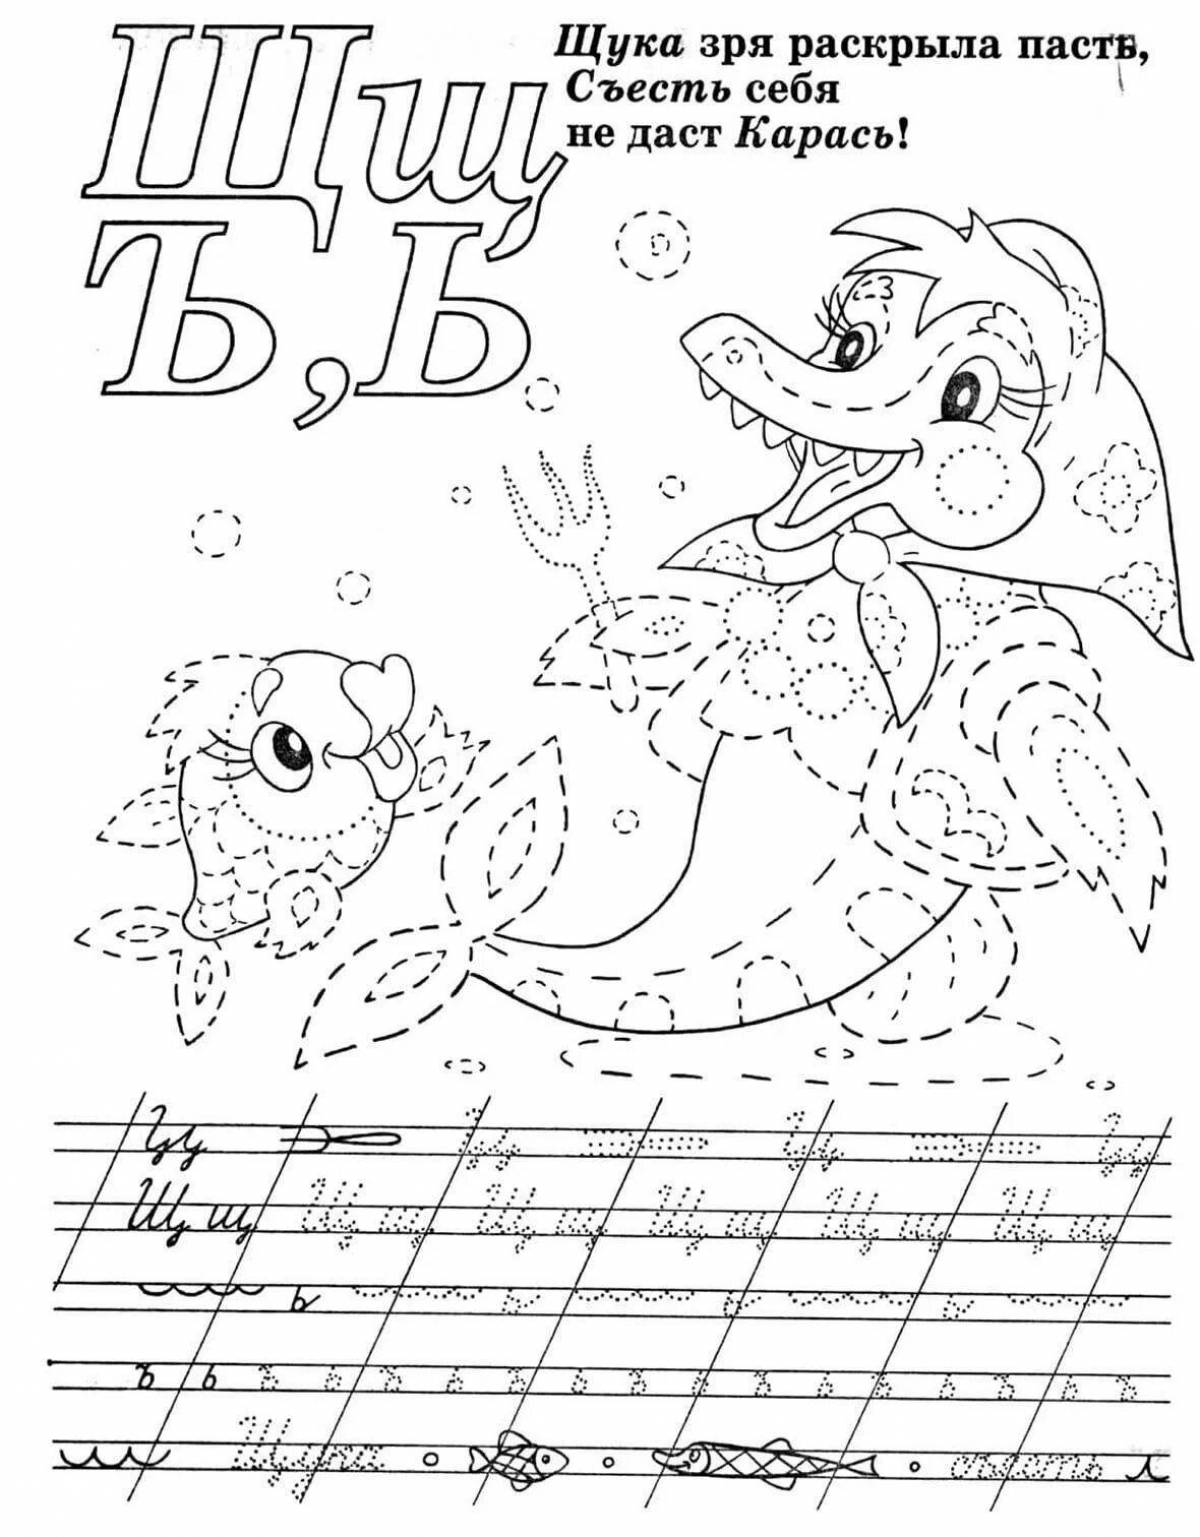 Charming alphabet coloring book